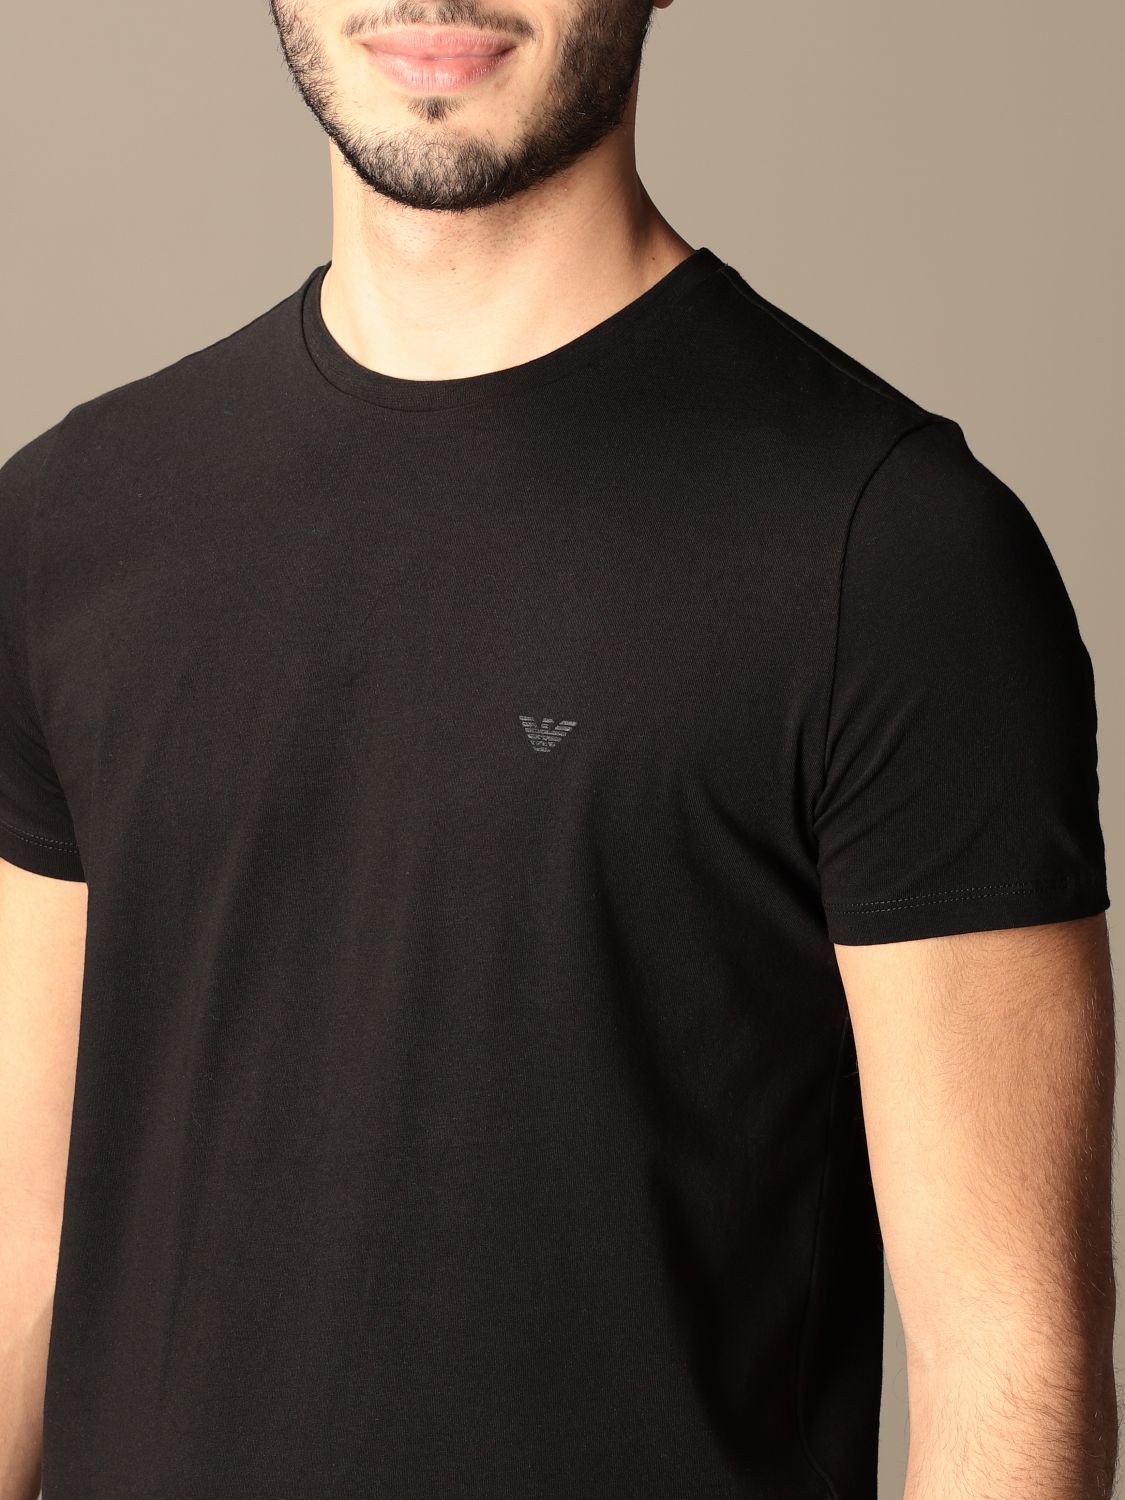 EMPORIO ARMANI: cotton t-shirt with logo - Black | T-Shirt Emporio ...